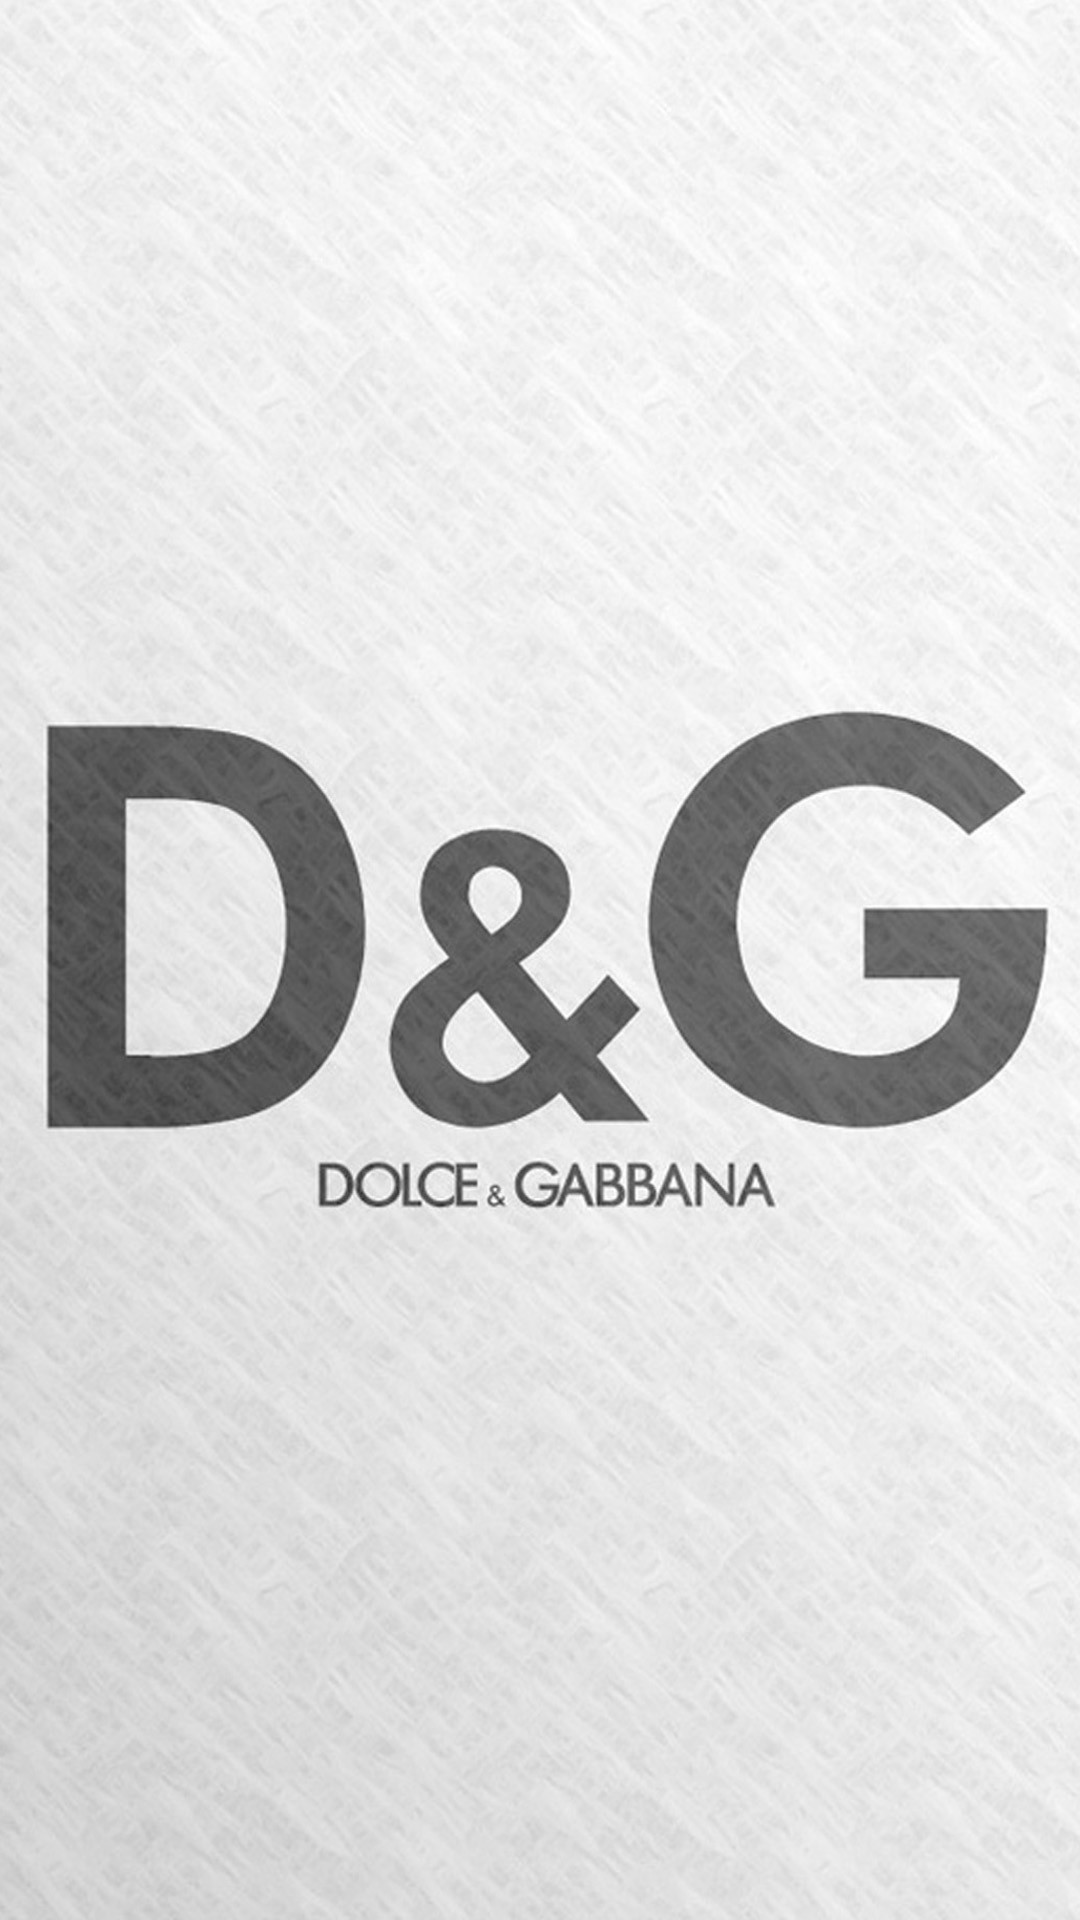 Dolce and Gabbana iPhone Background Stars 1080x1920